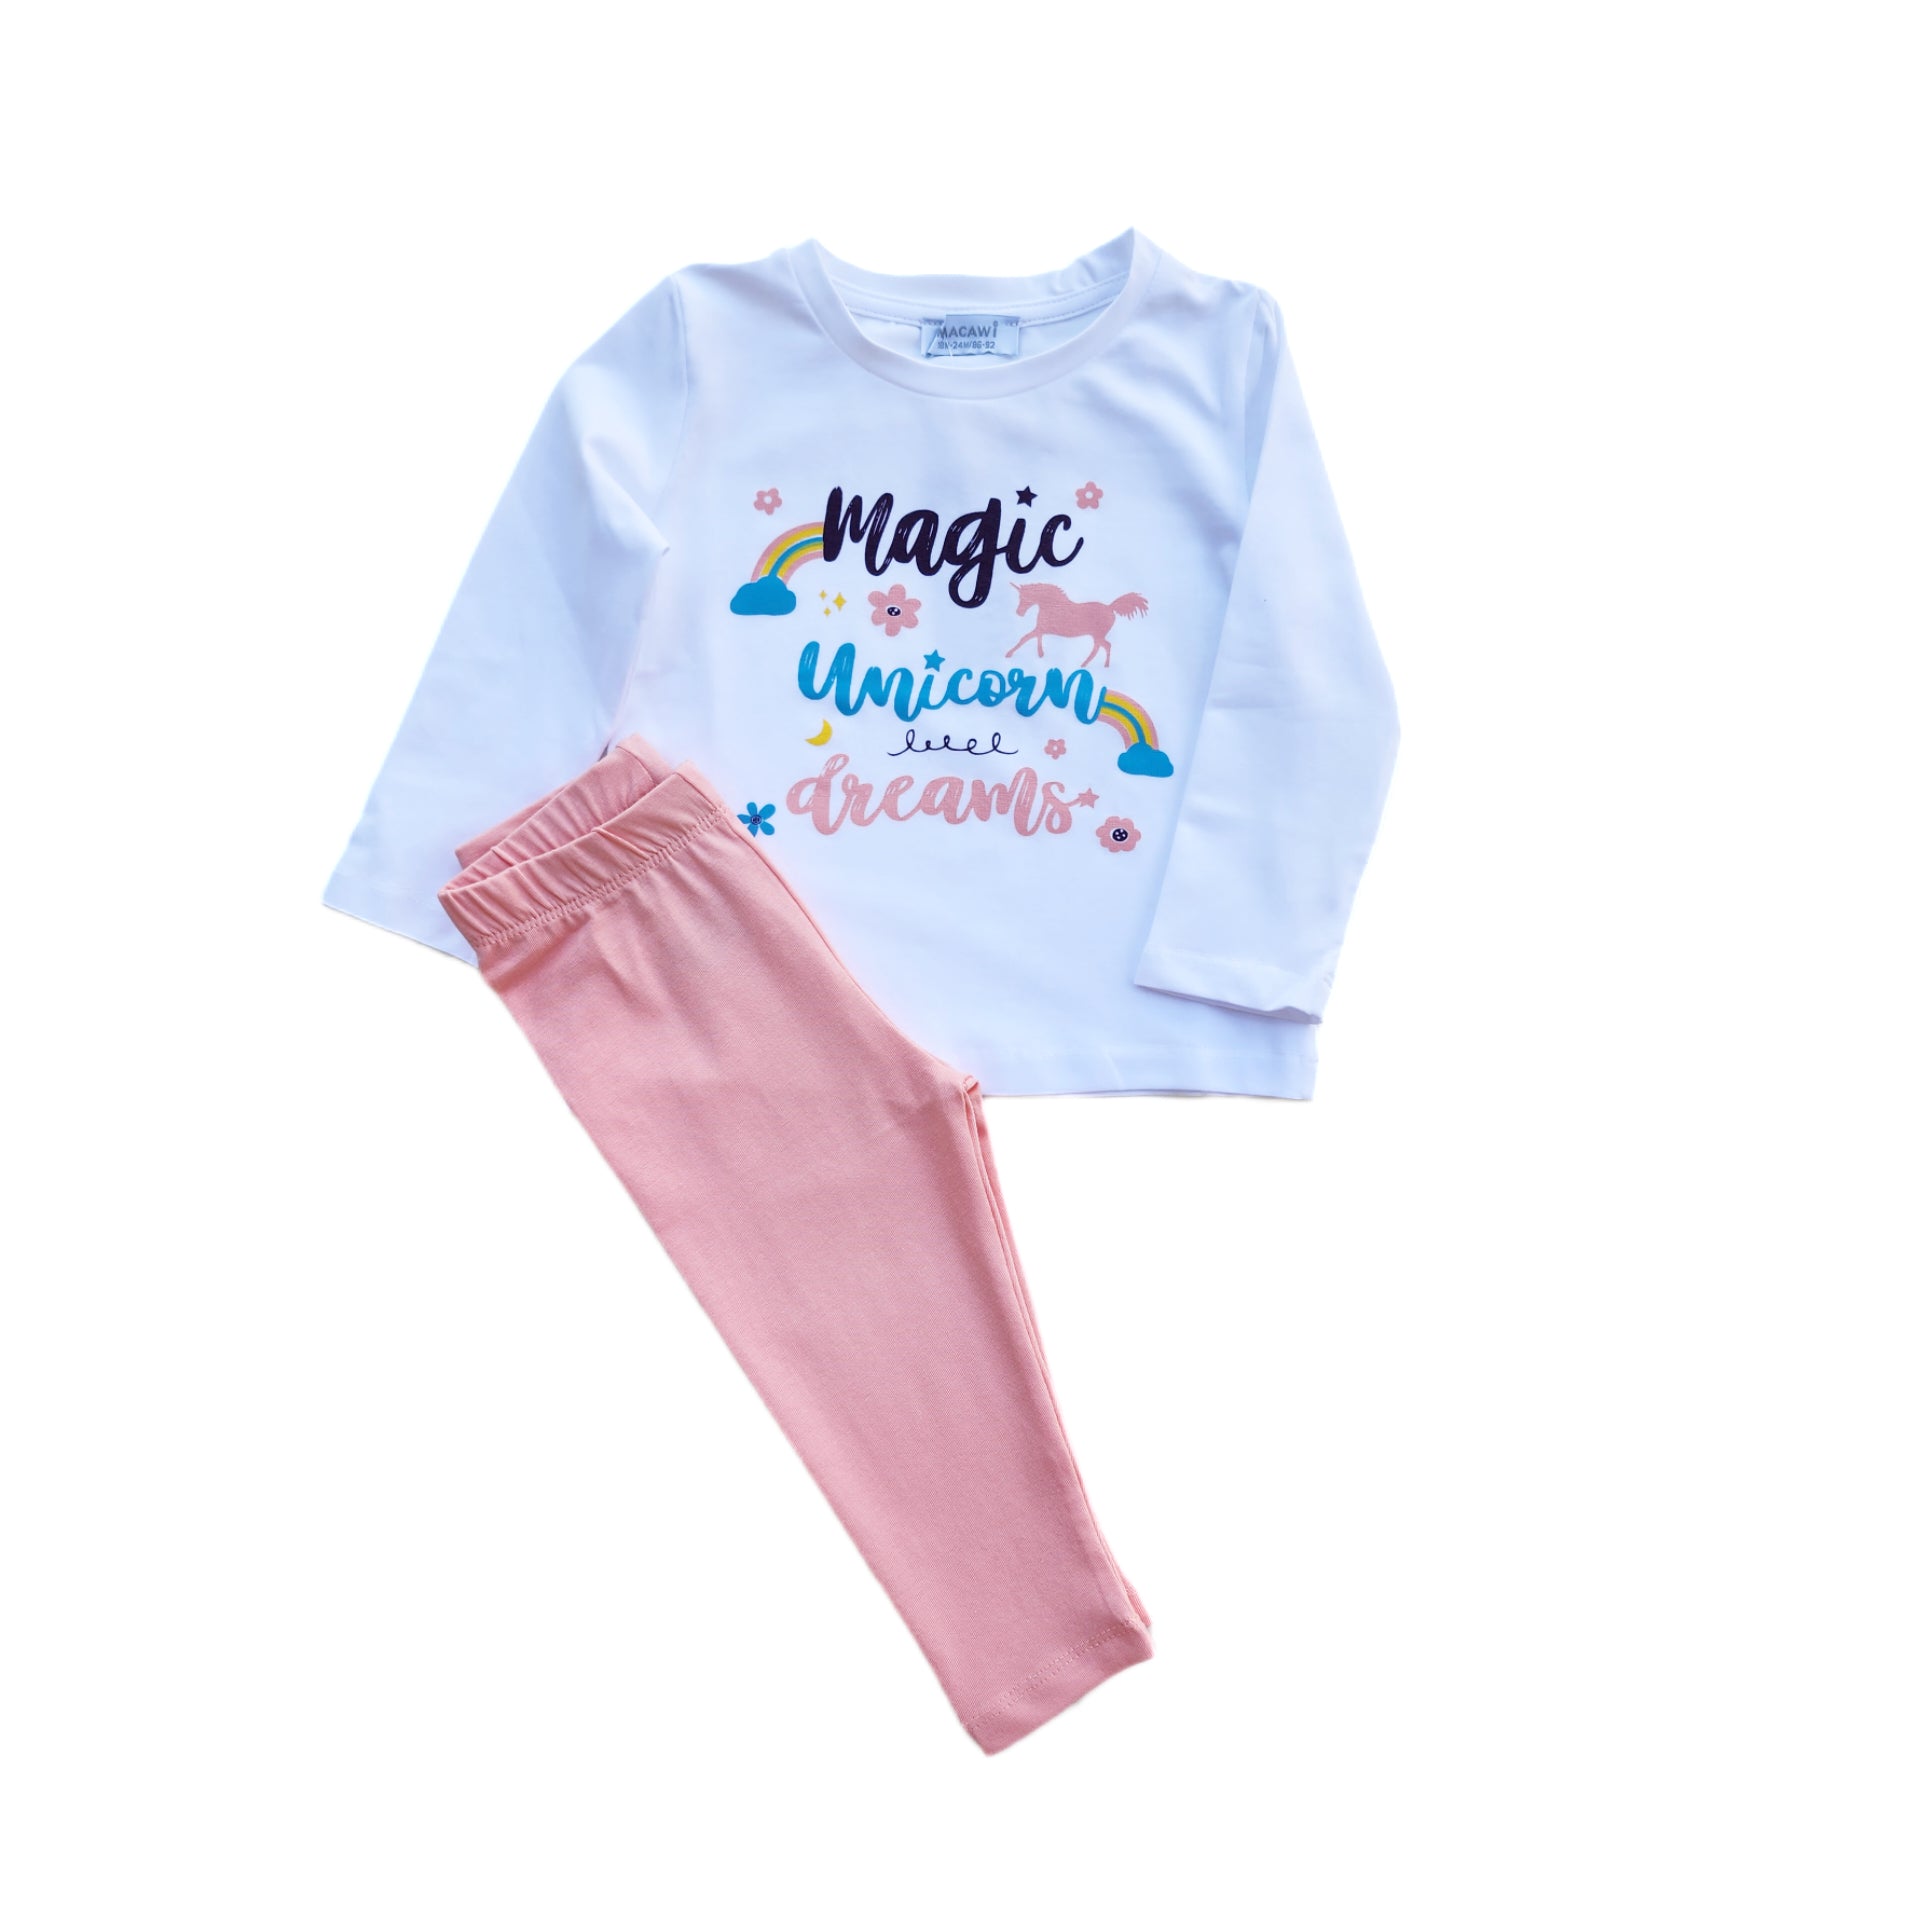 Magic Unicorn Dreams Girls Pajama - Magic Unicorn Dreams Girls Pajama - 1-2 Years / White/Salmon - Macawi - Melymod